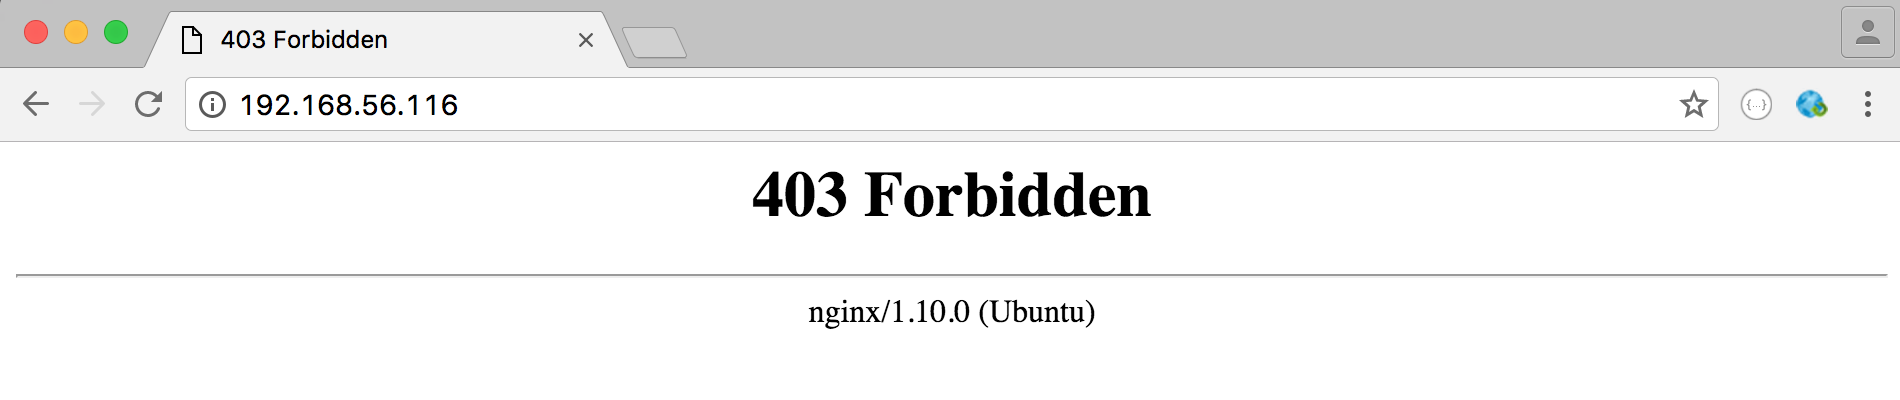 02-403-forbidden